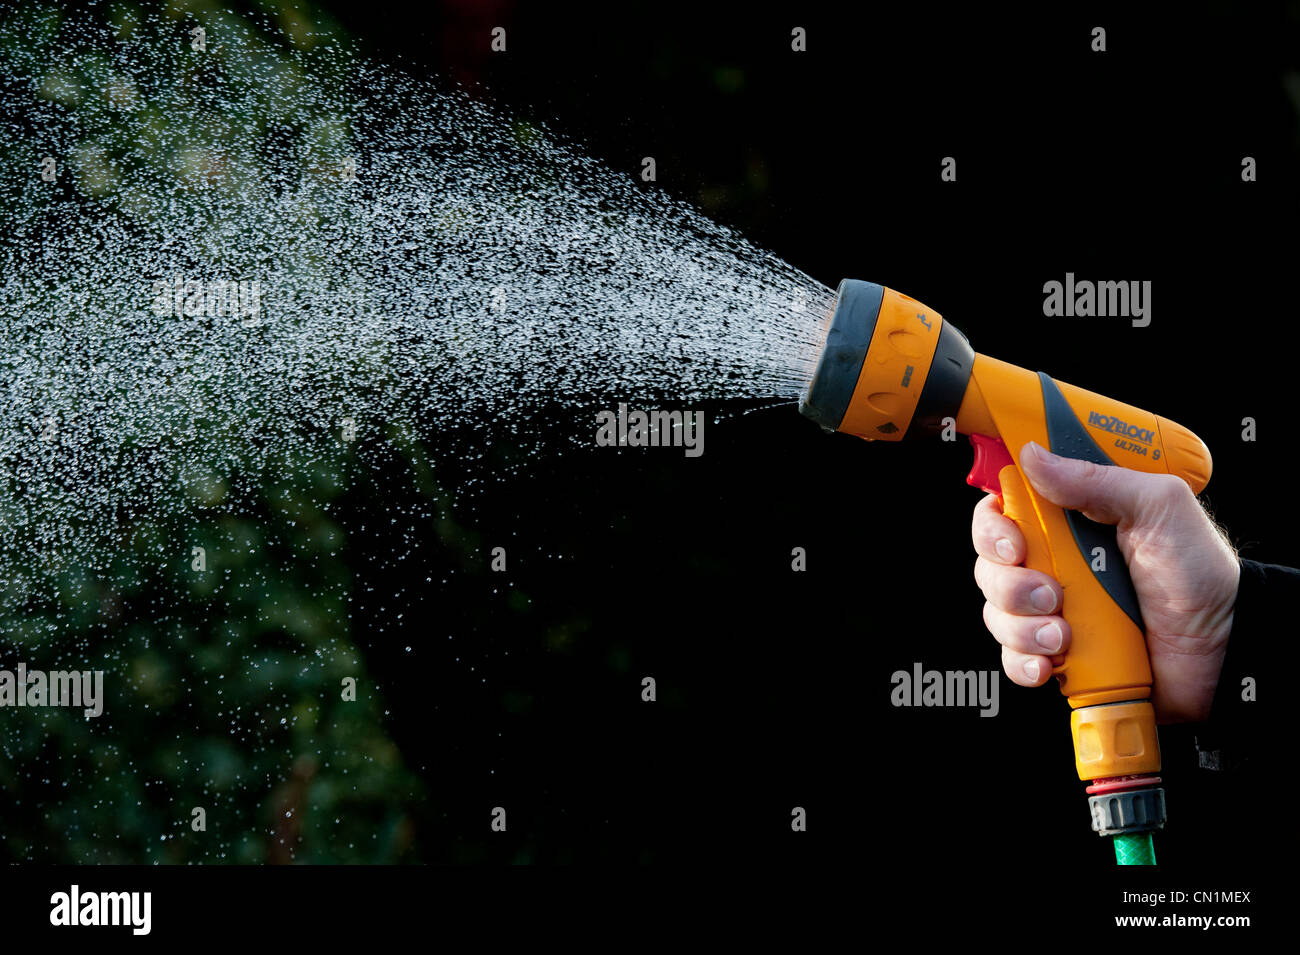 Gardeners hand spraying water with hosepipe against a dark background. UK Stock Photo